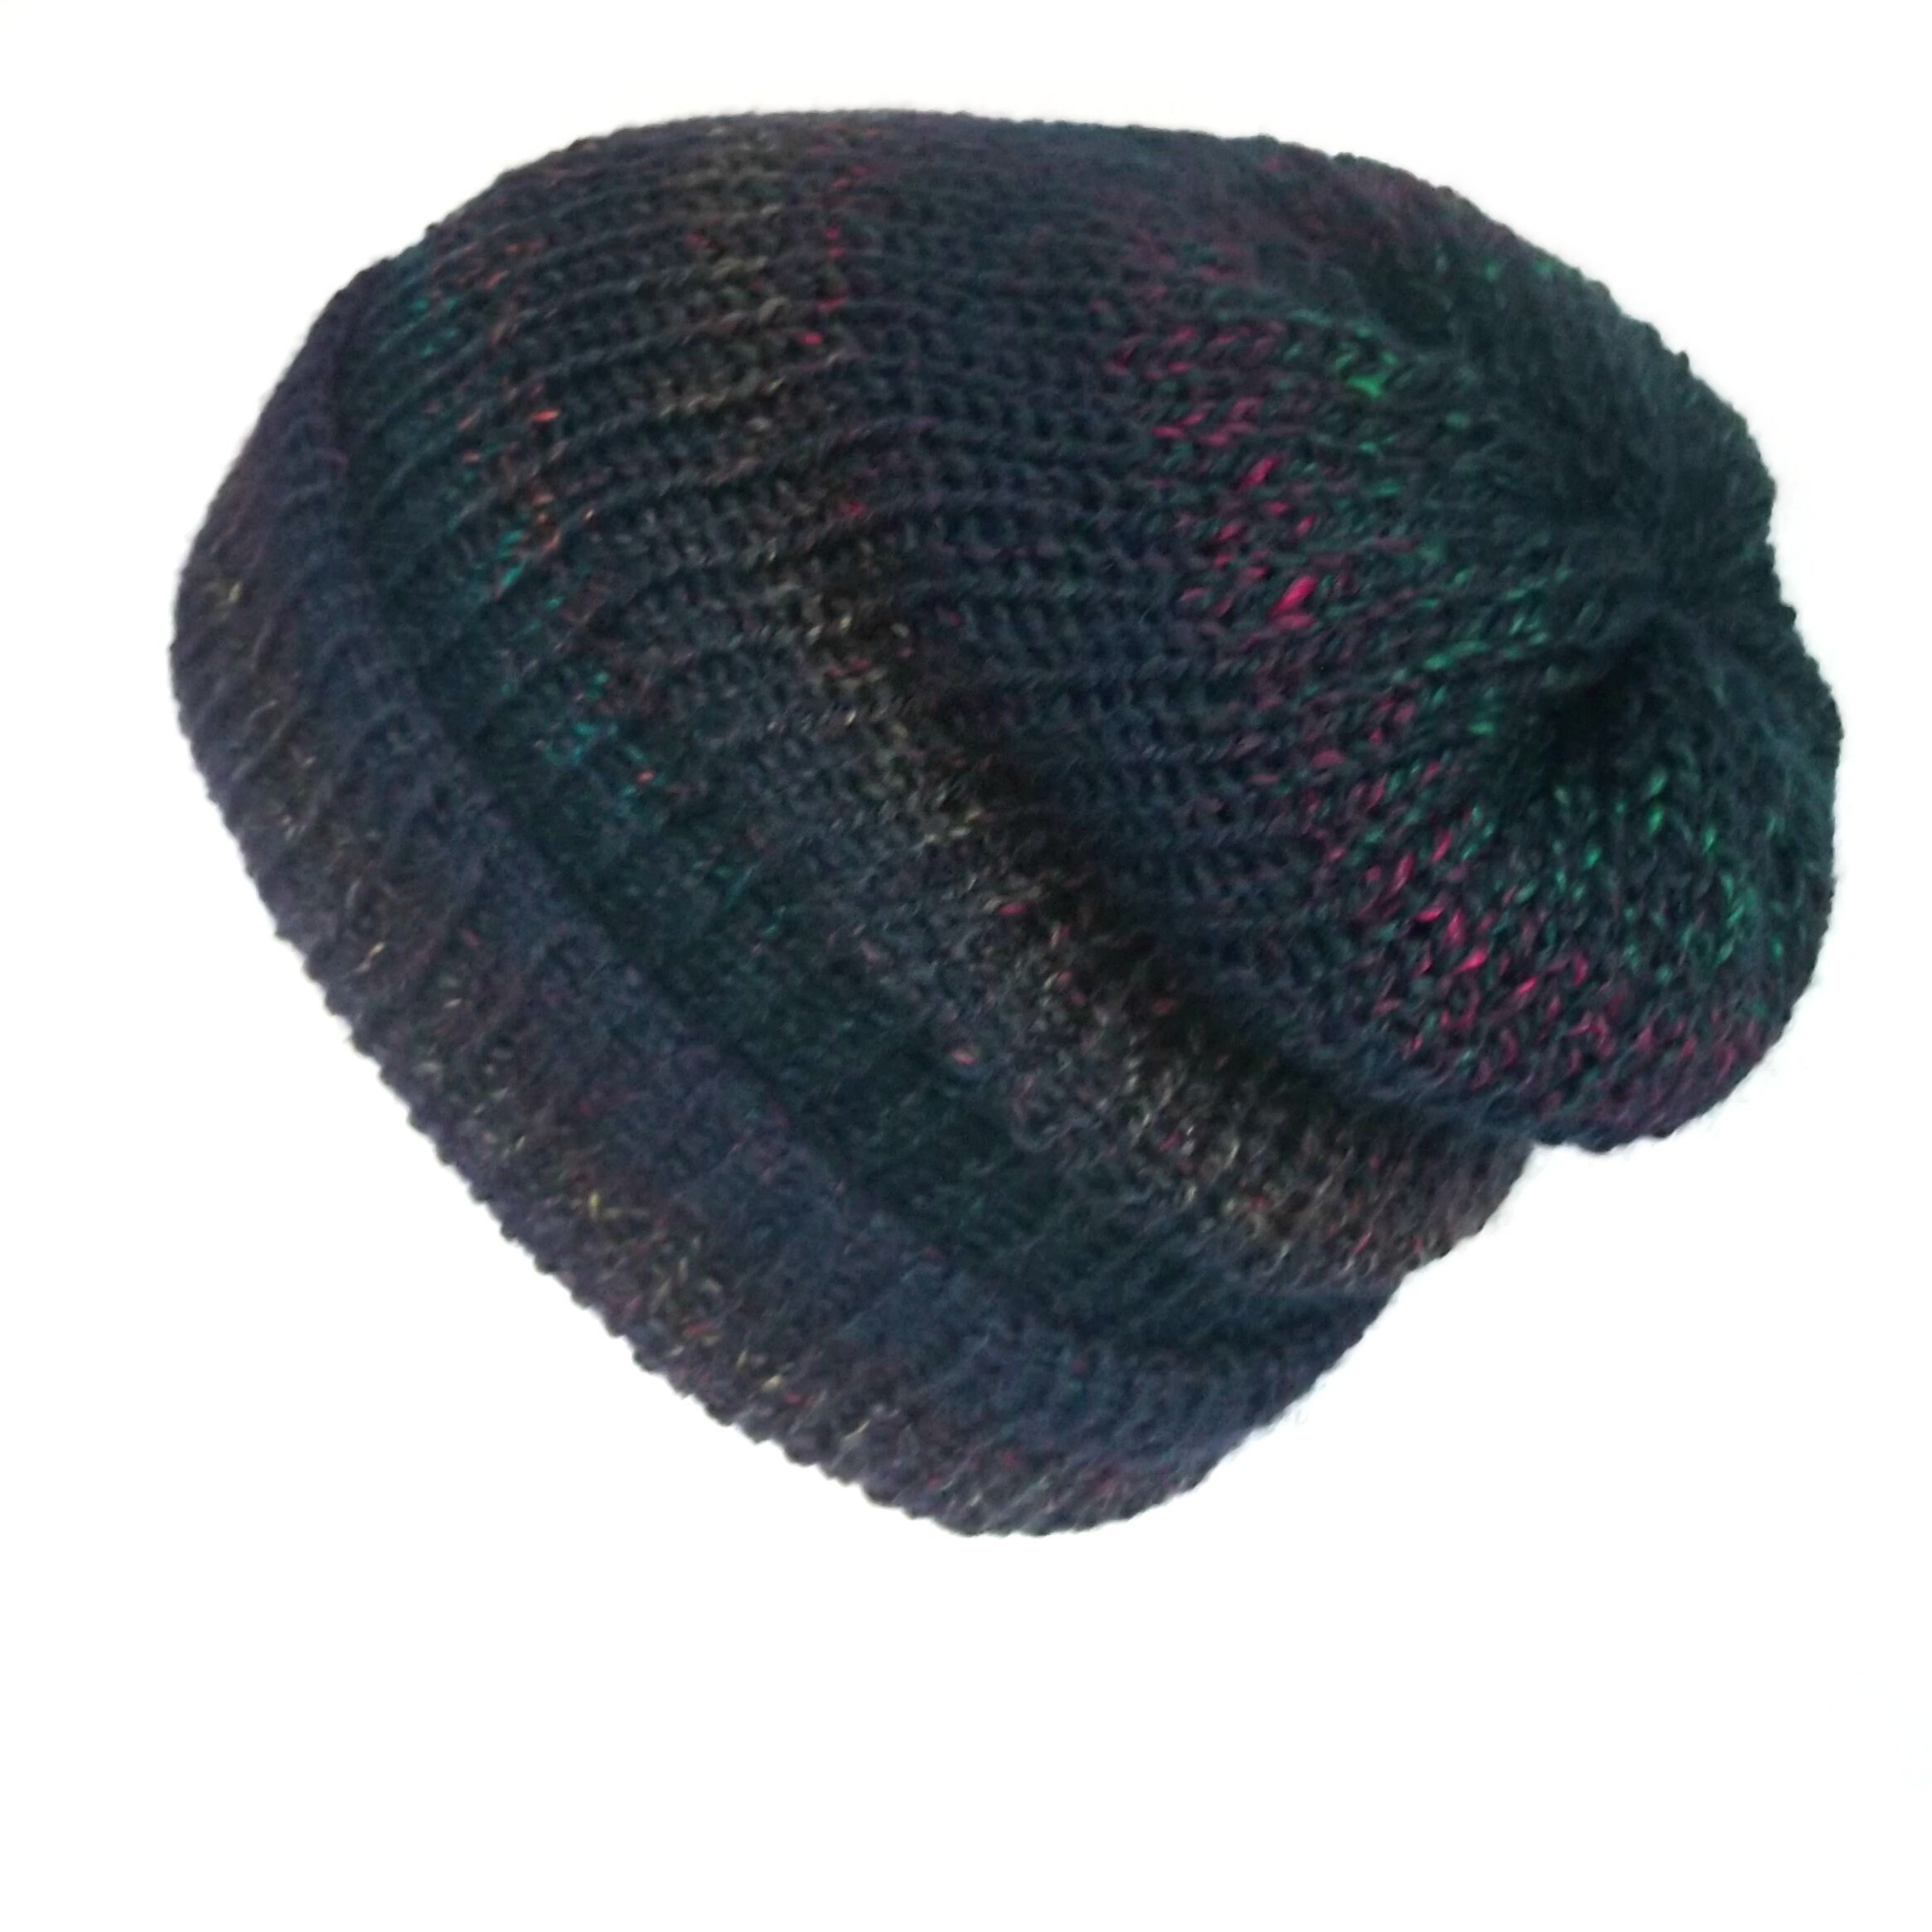 Blue beanie hat can be worn as a fishermen hat dreadlock hat | Etsy